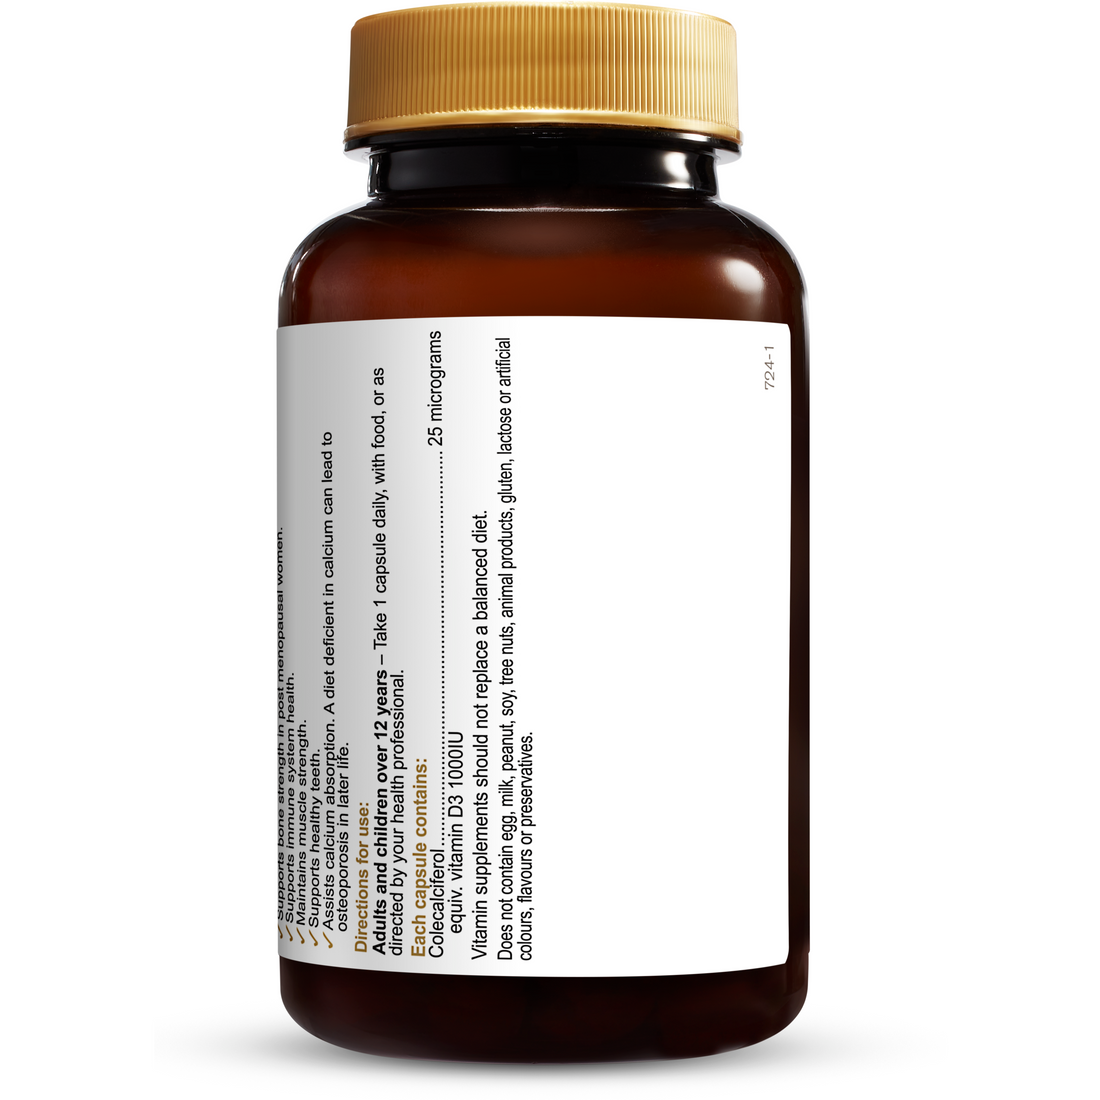 Herbs of Gold Vitamin D3 1000 240c